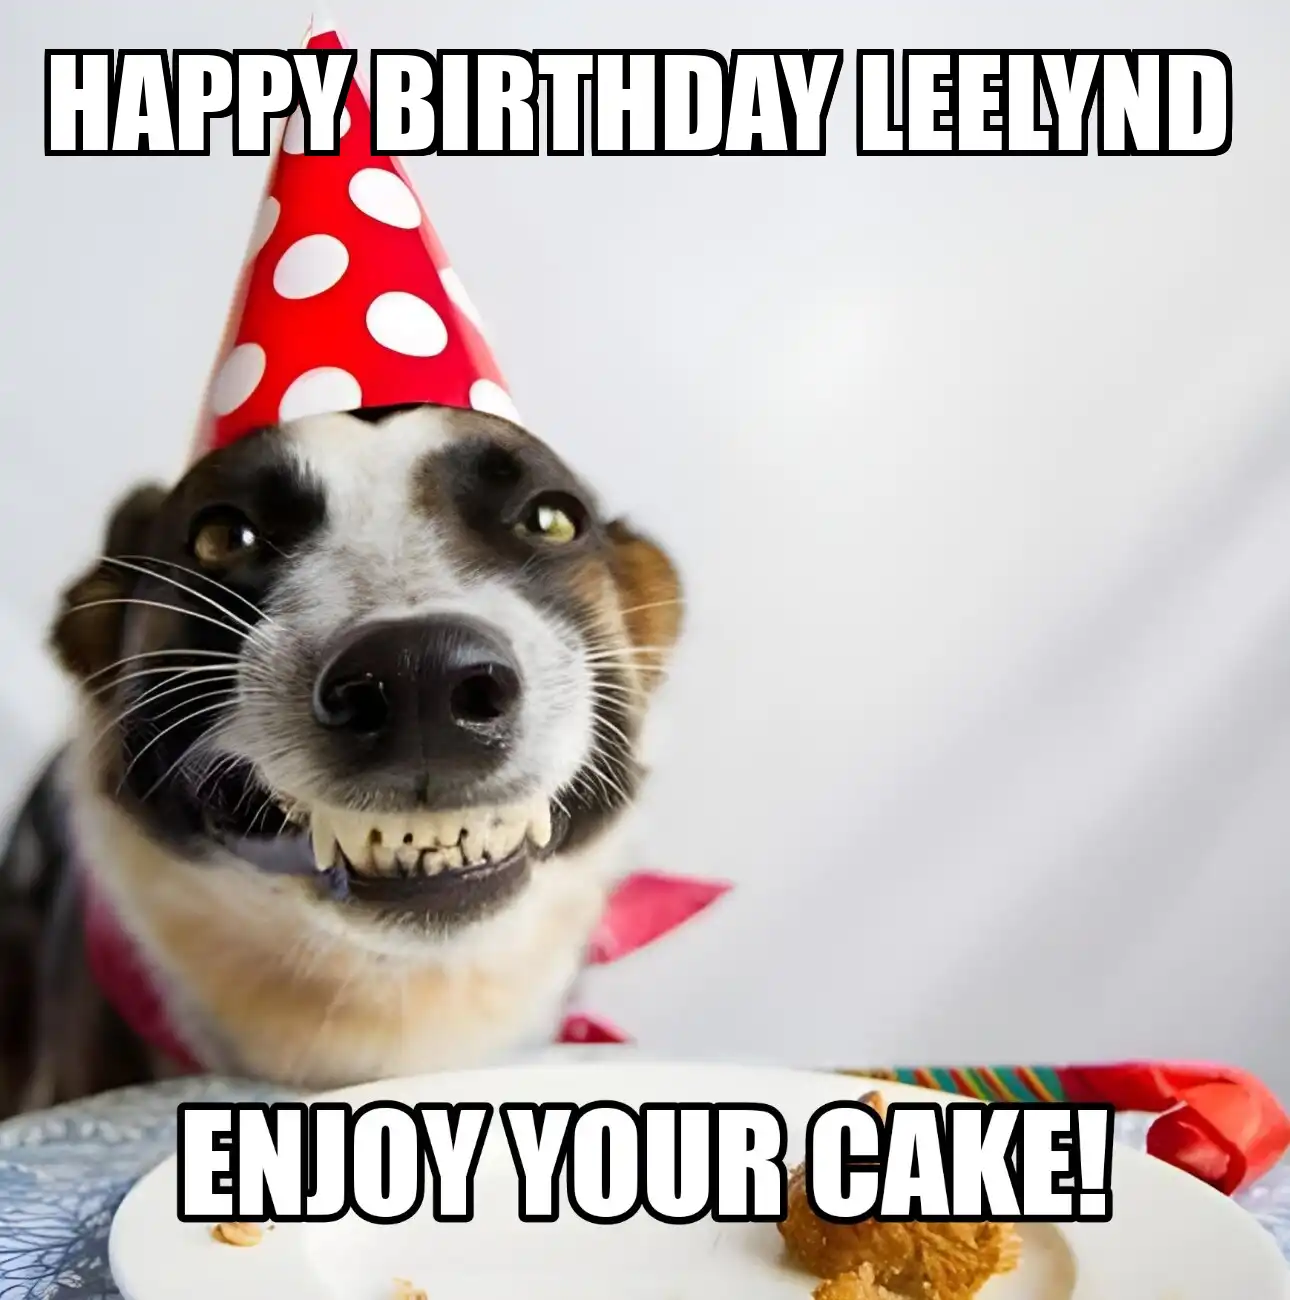 Happy Birthday Leelynd Enjoy Your Cake Dog Meme